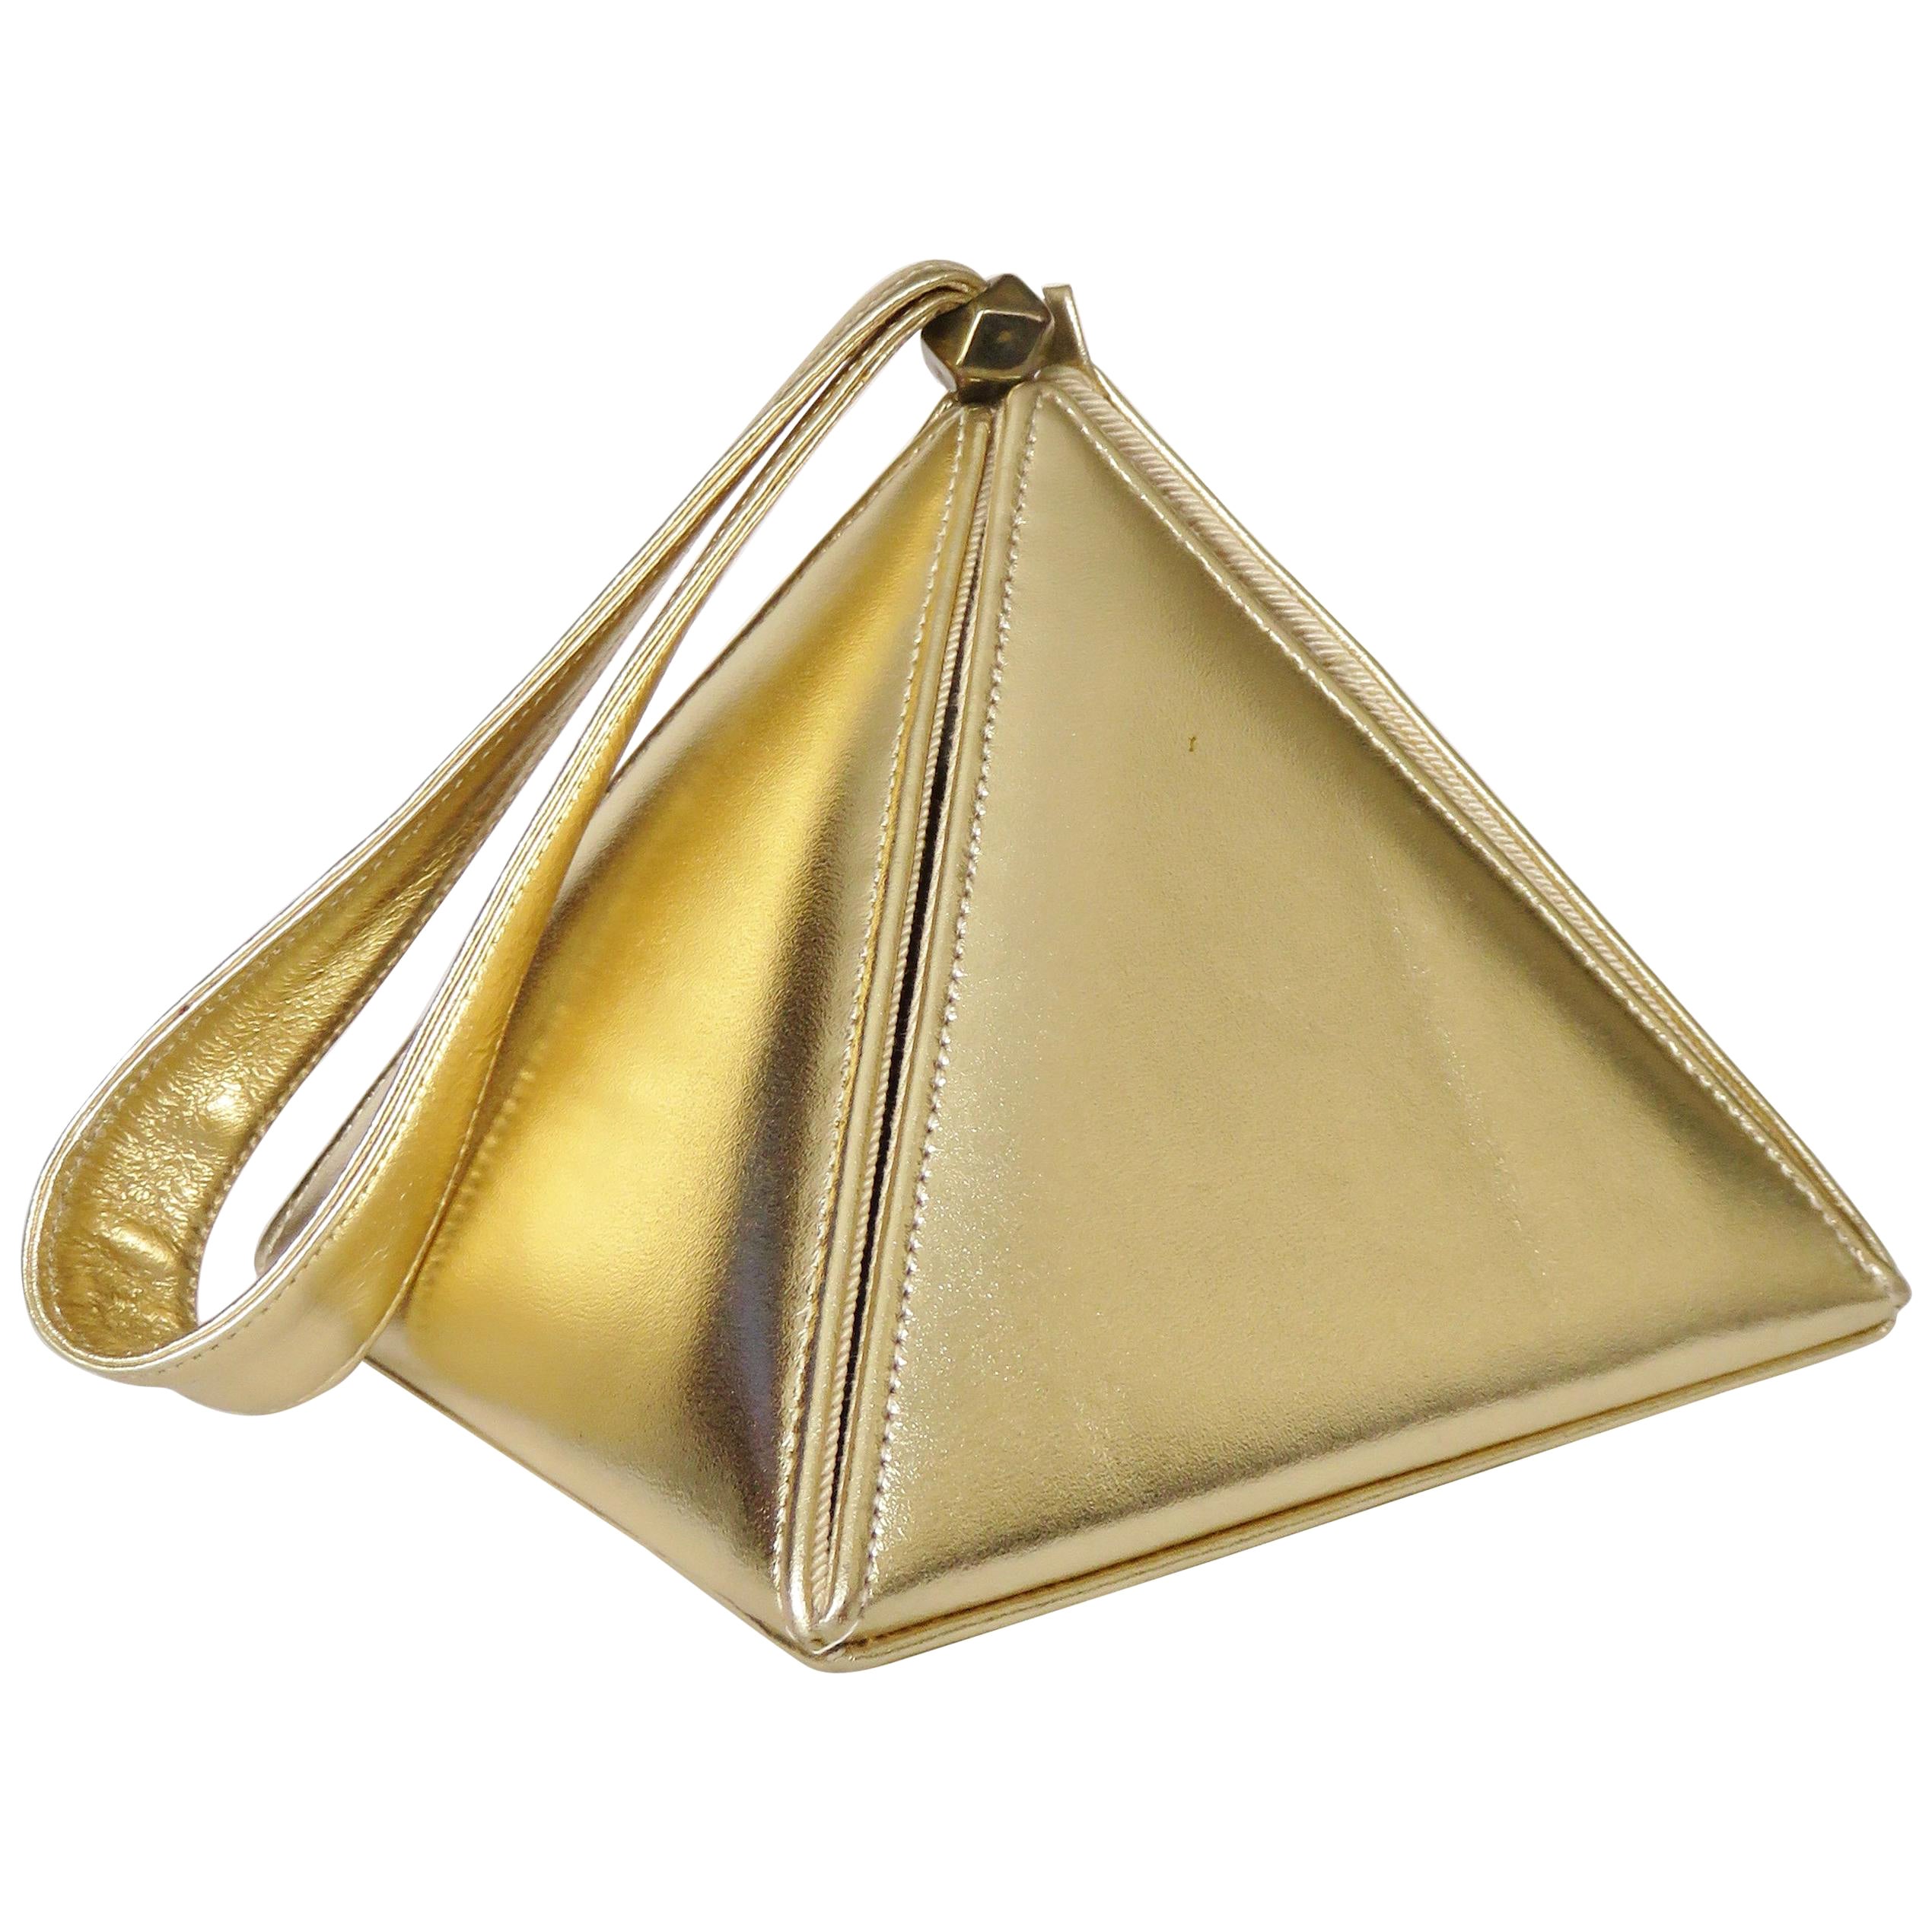 Carey Adina New Gold Leather Pyramid Box Bag 1990s